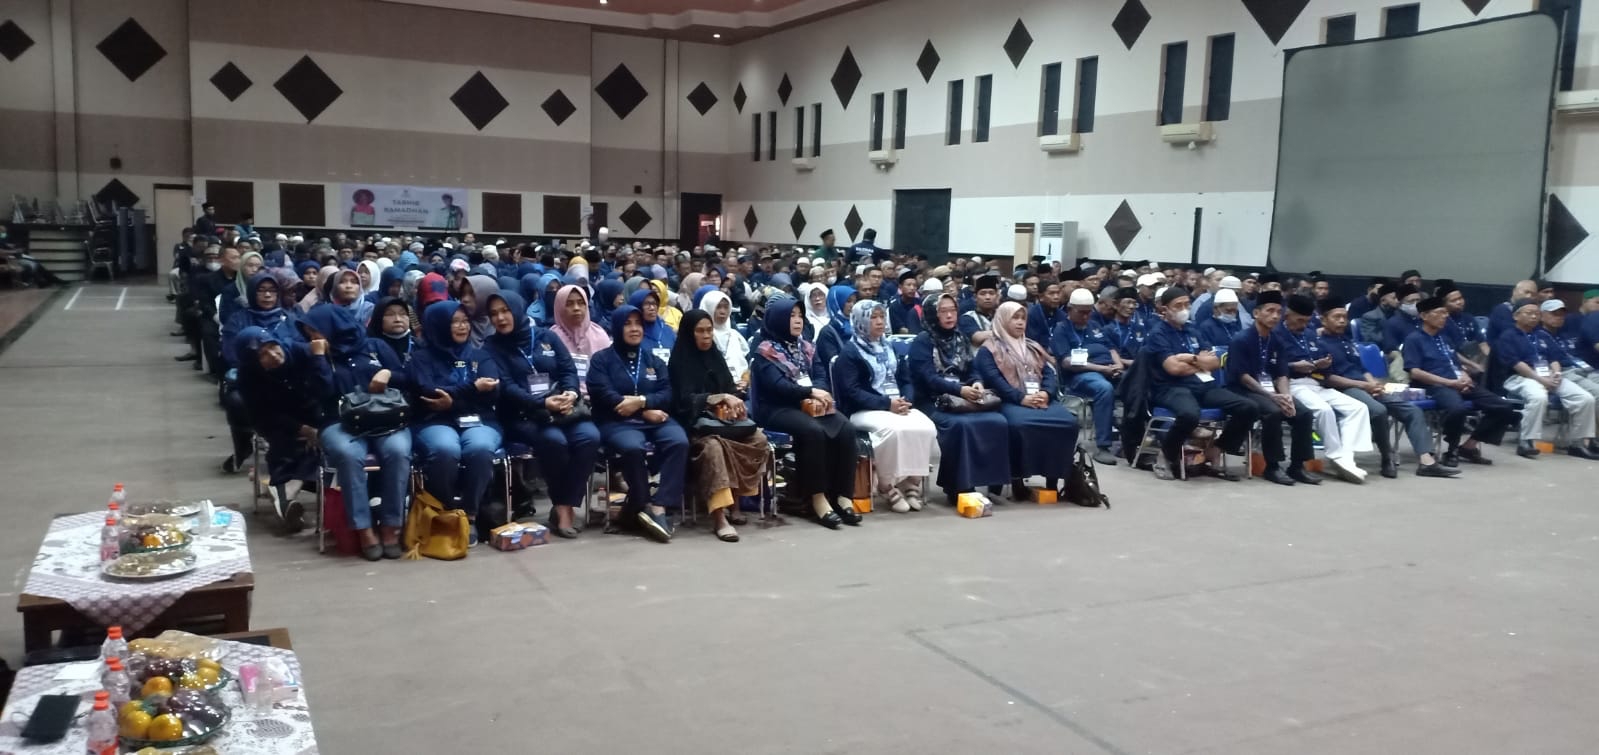 Wali Kota Banjar Buka Kegiatan ESQ untuk Unit Pengumpul Zakat dan ASN se-Kota Banjar